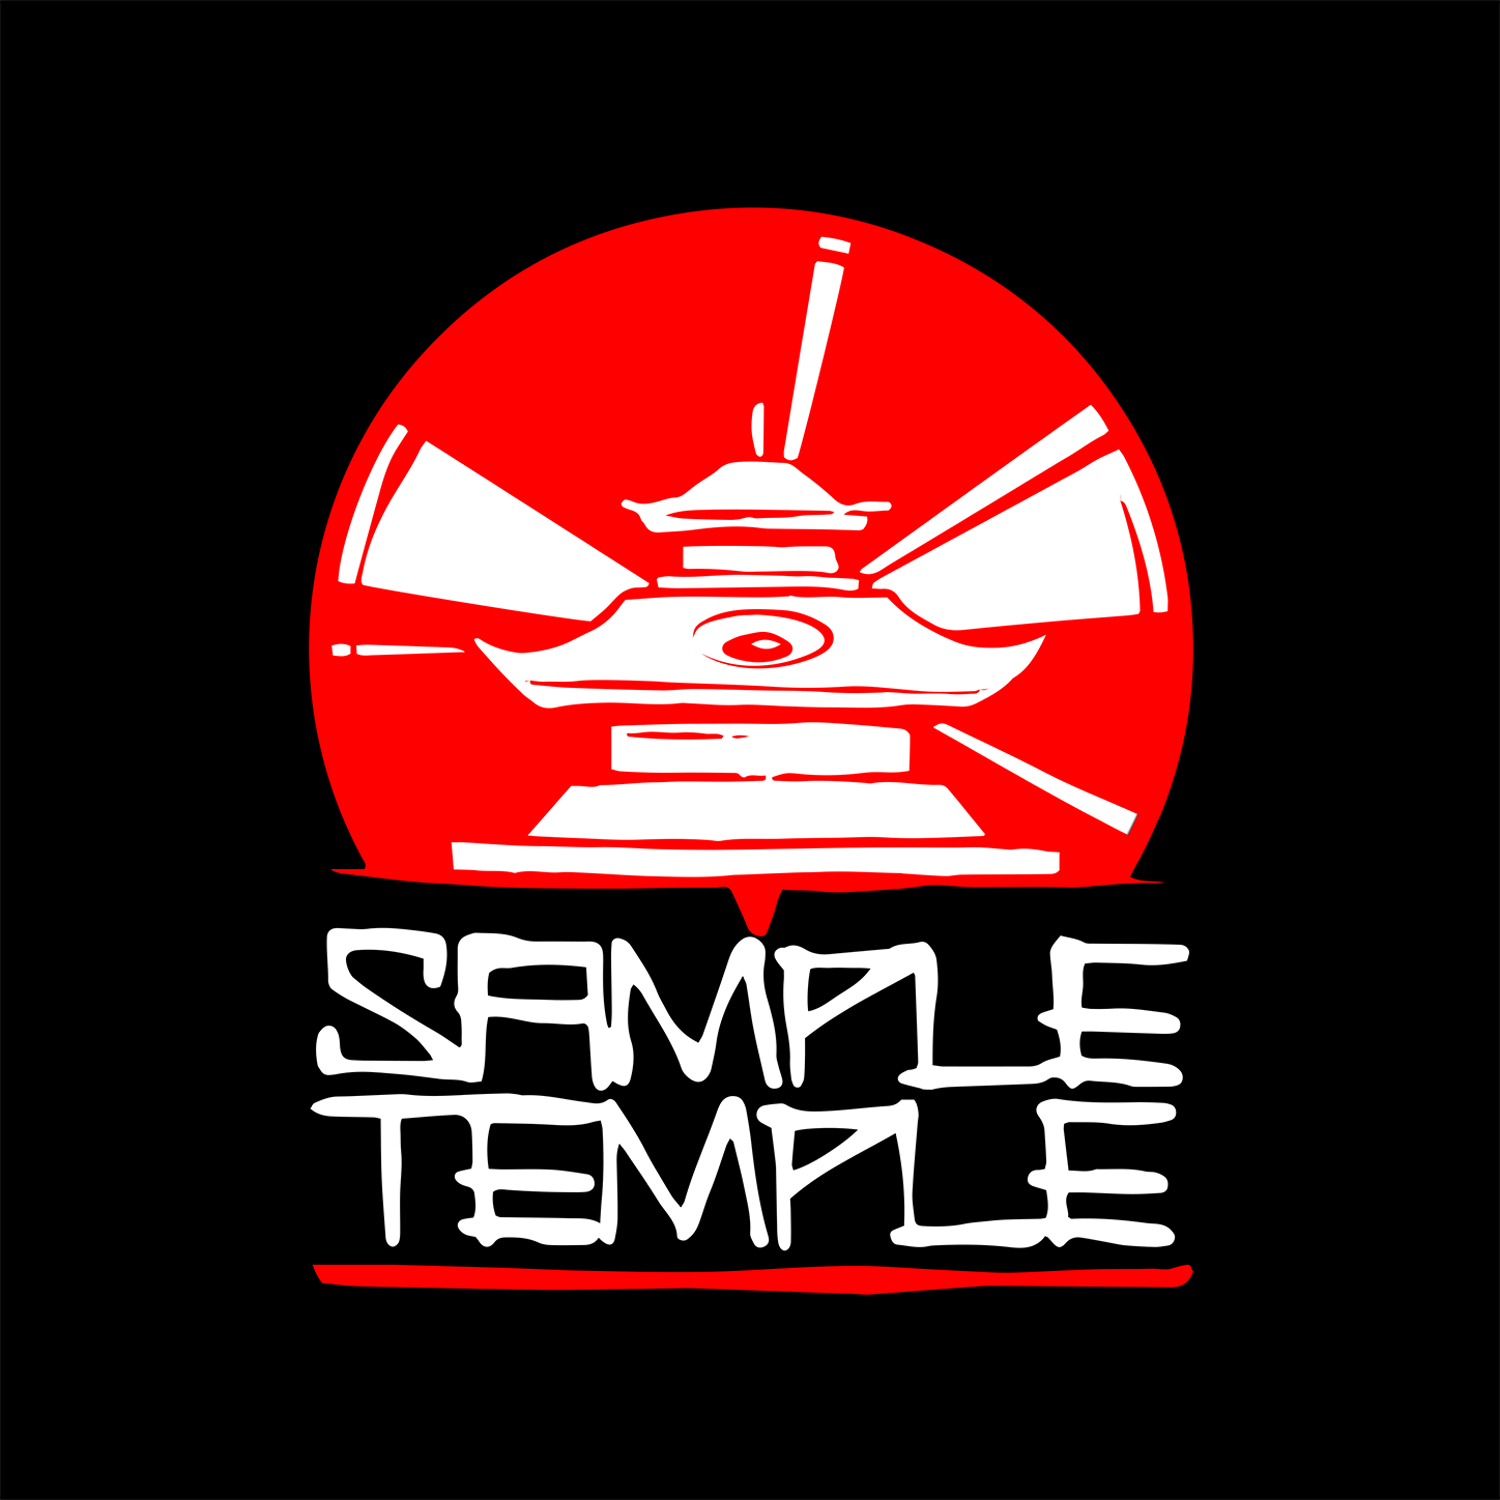 Sample temple